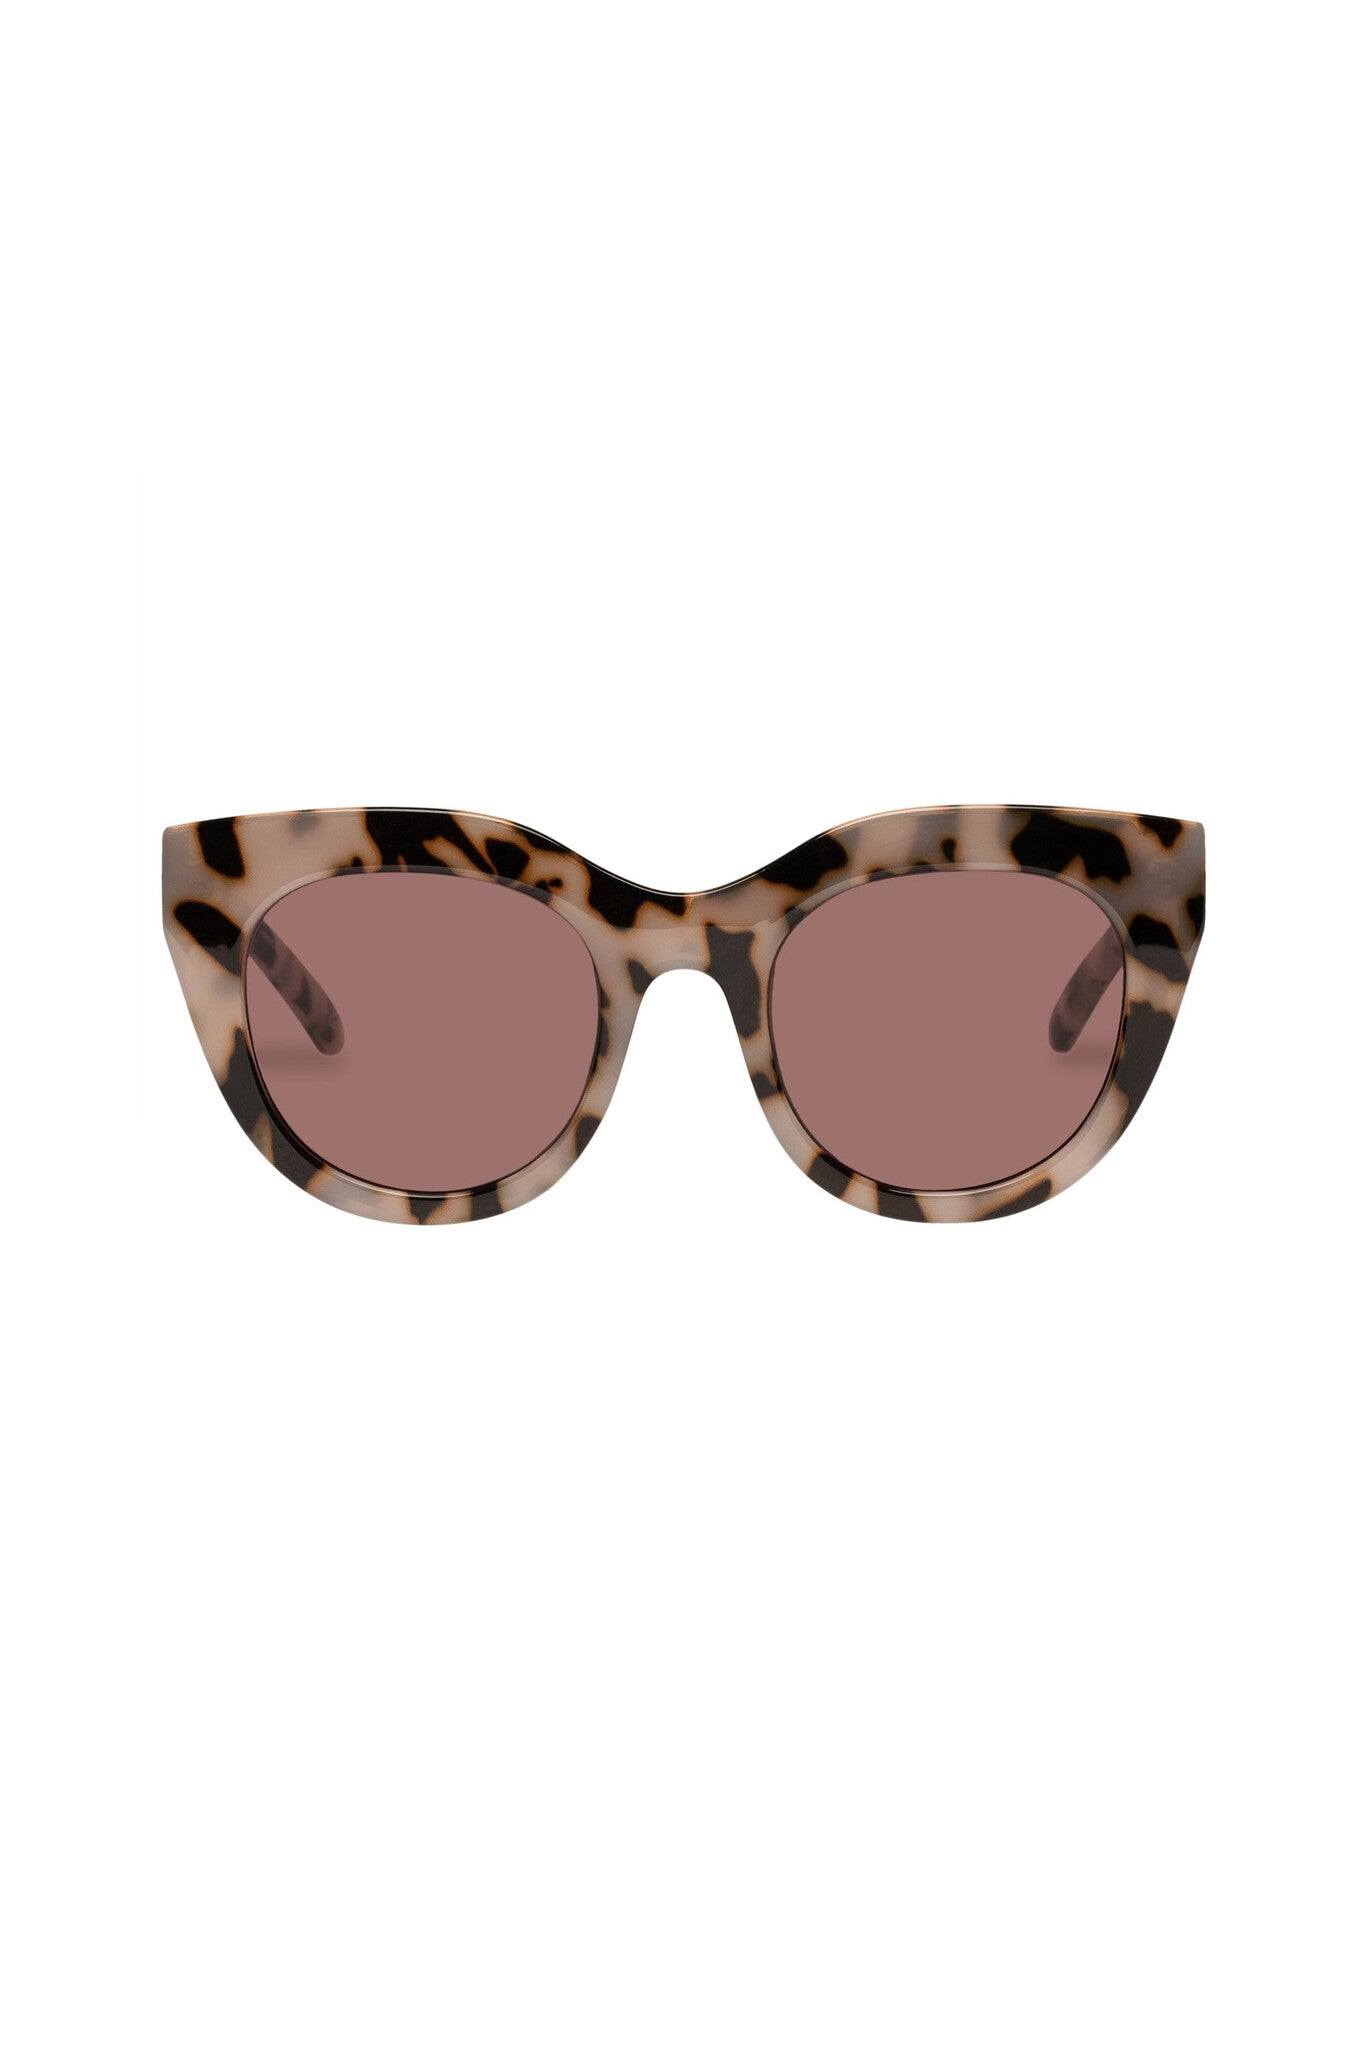 Air Heart Sunglasses - Cookie Tort